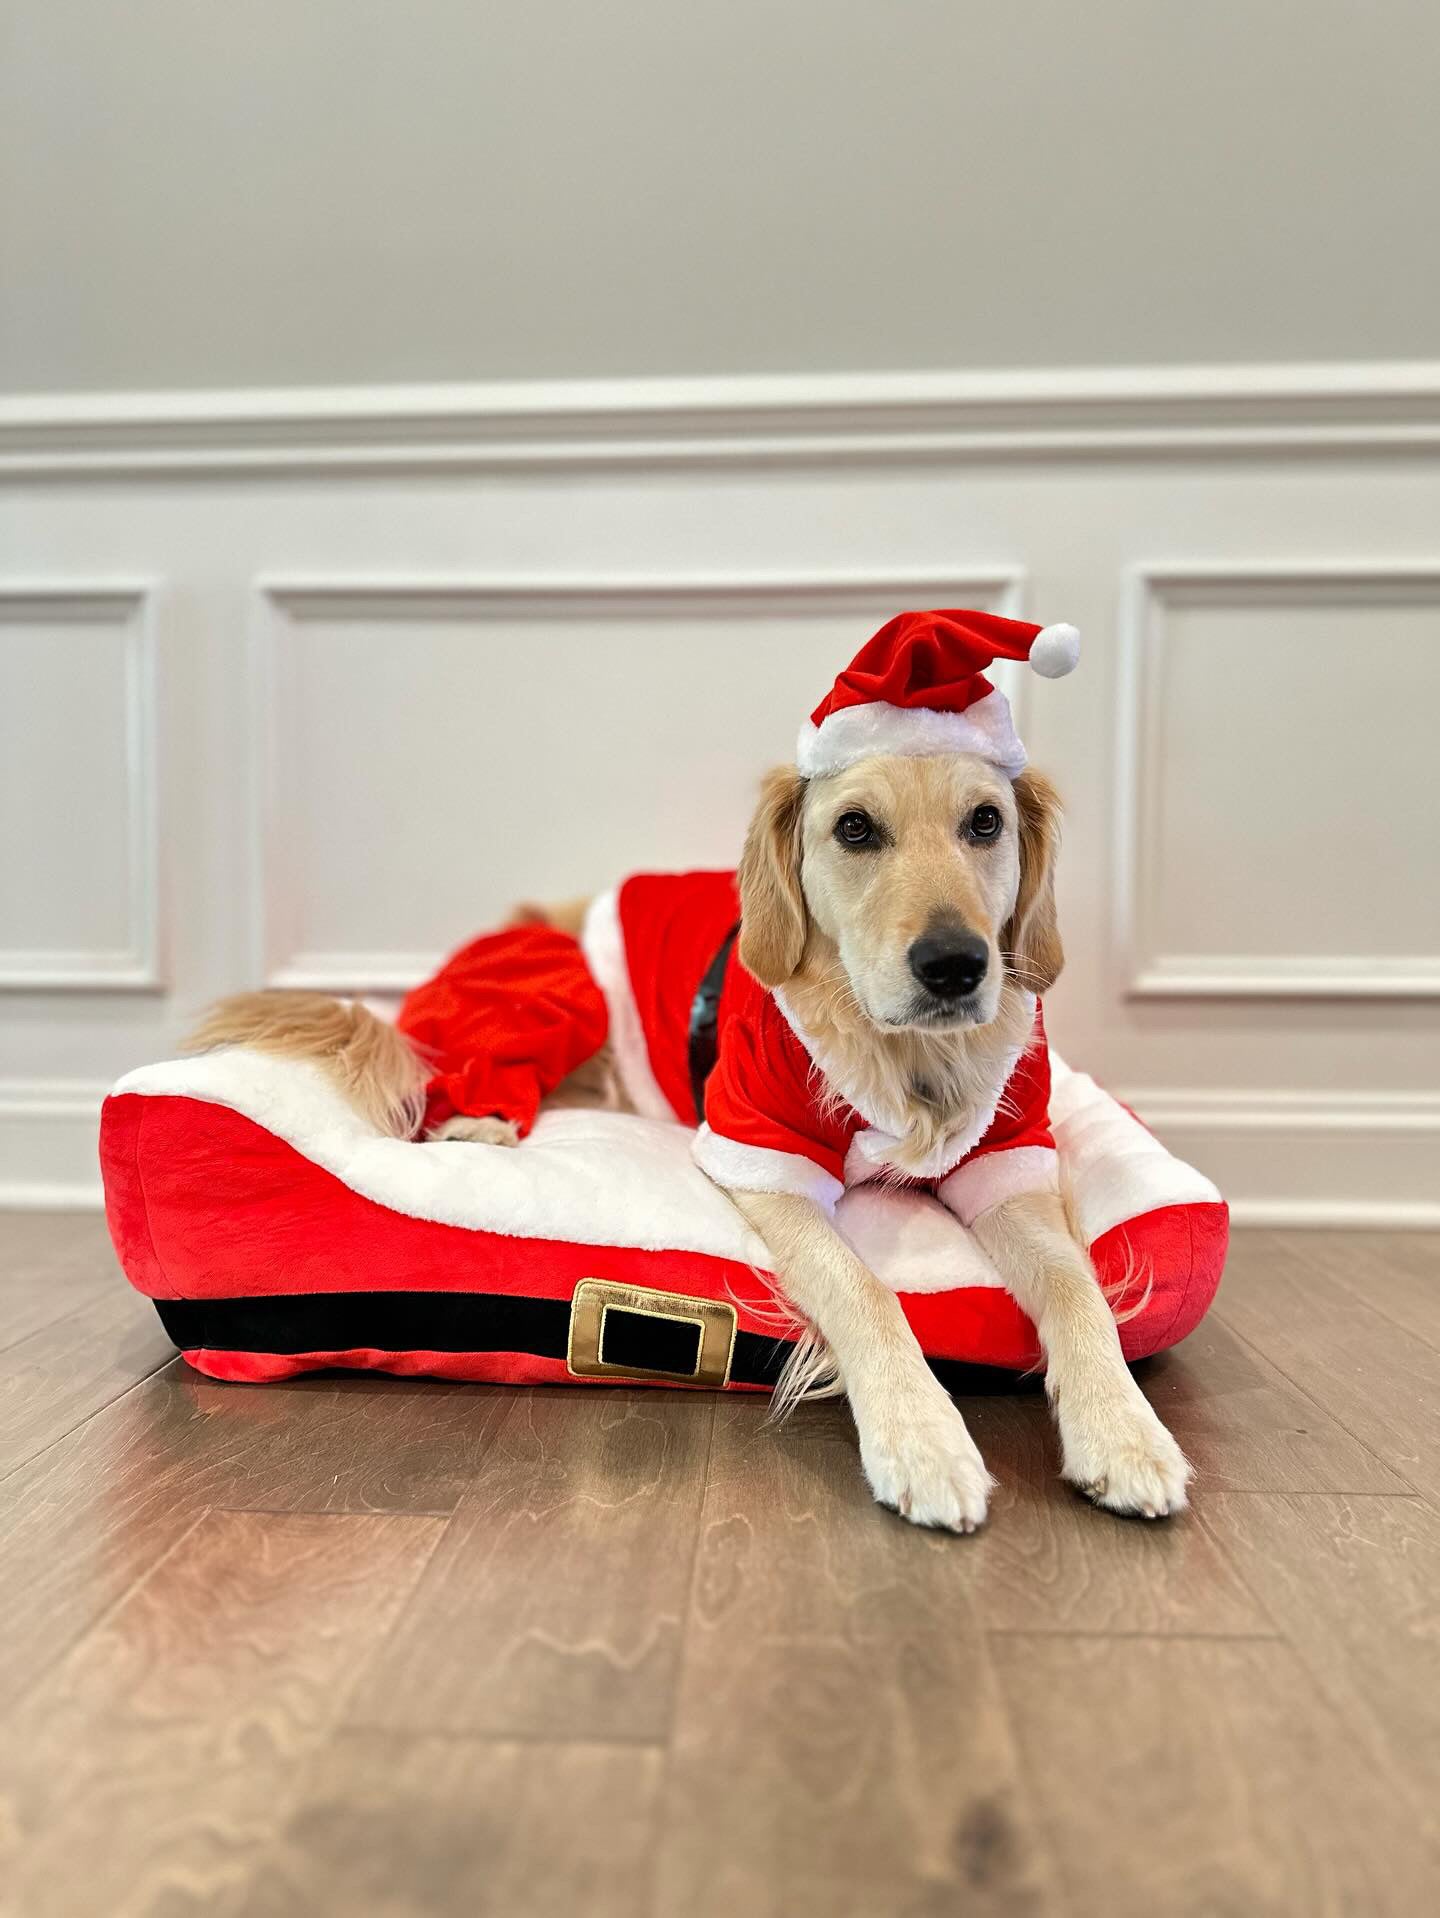 Midlee Dog Santa Claus Costume